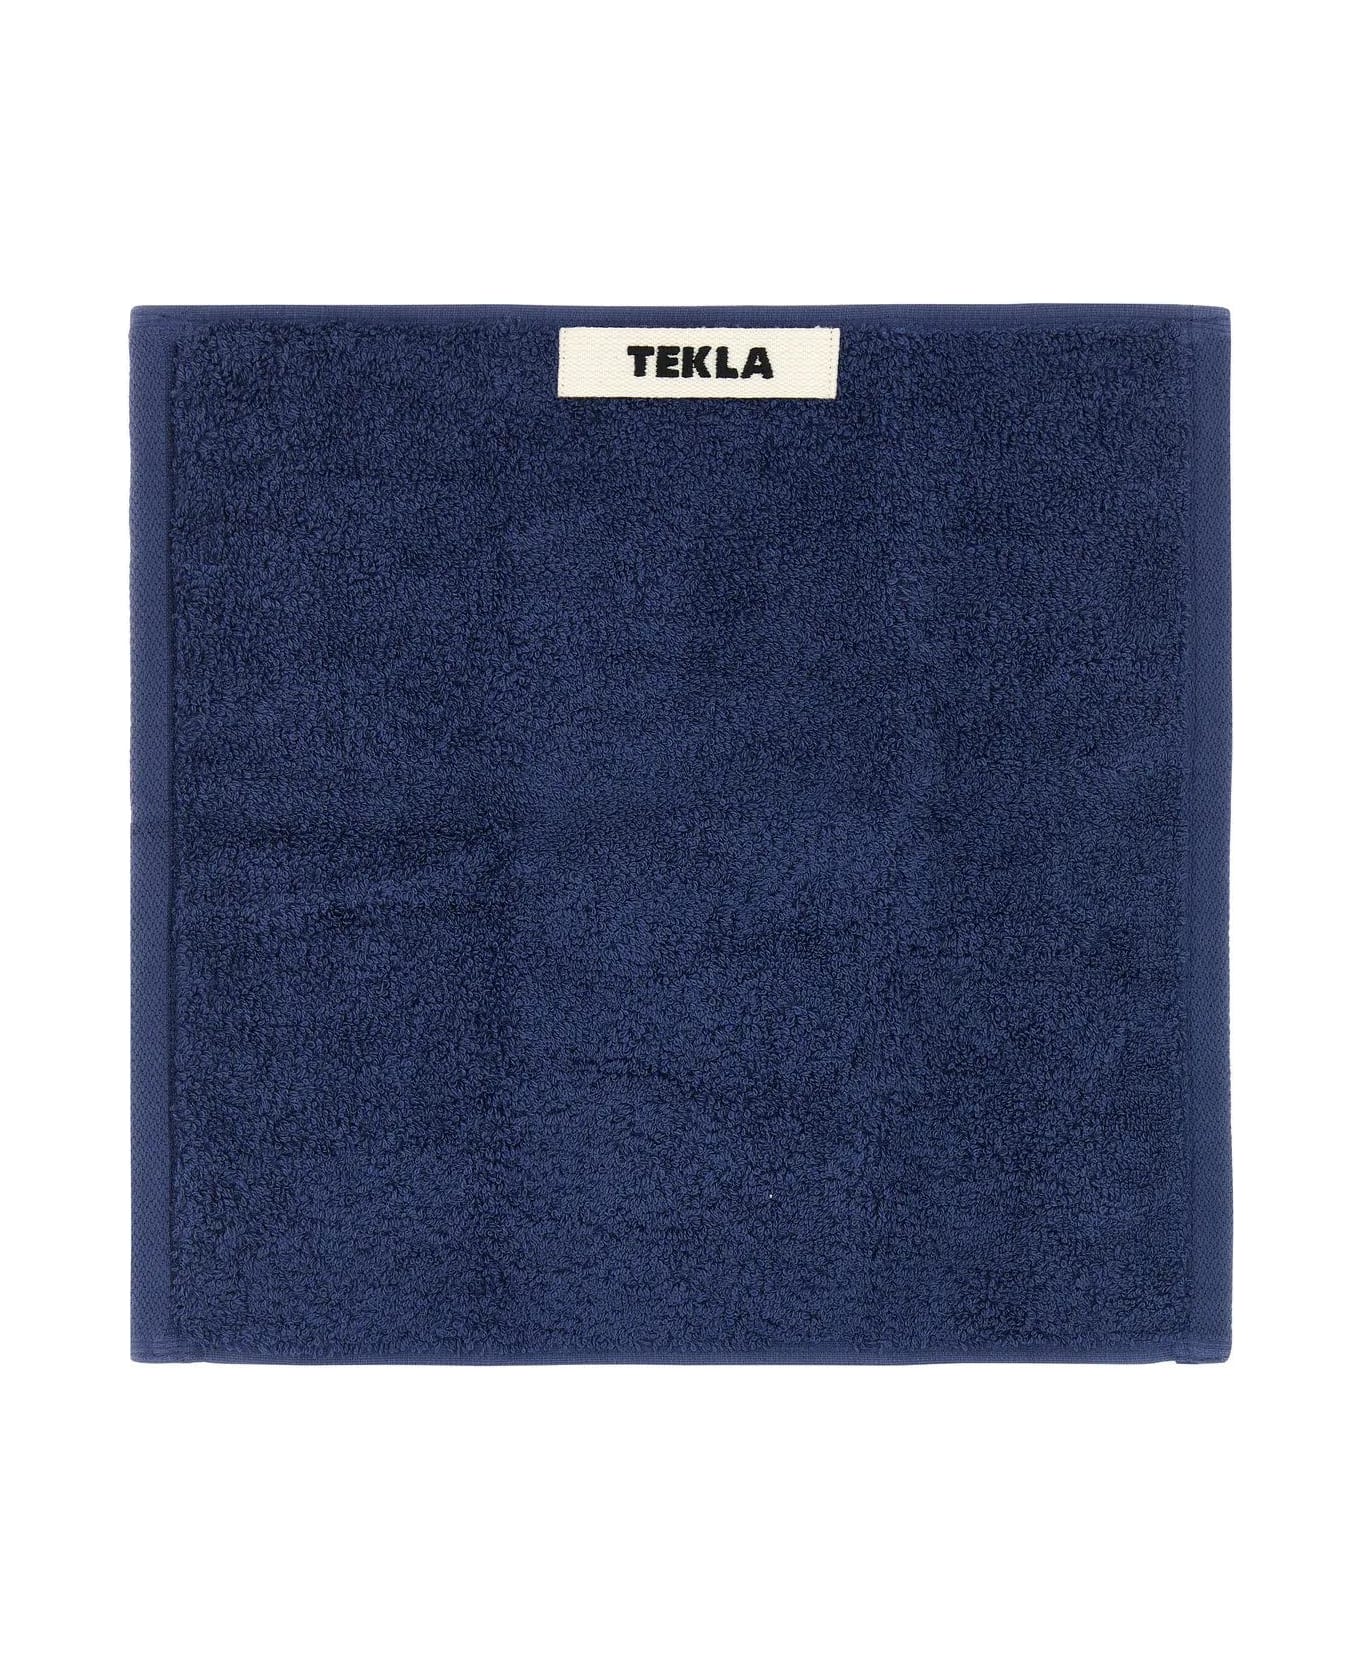 Tekla Air Force Blue Terry Towel - BLUE